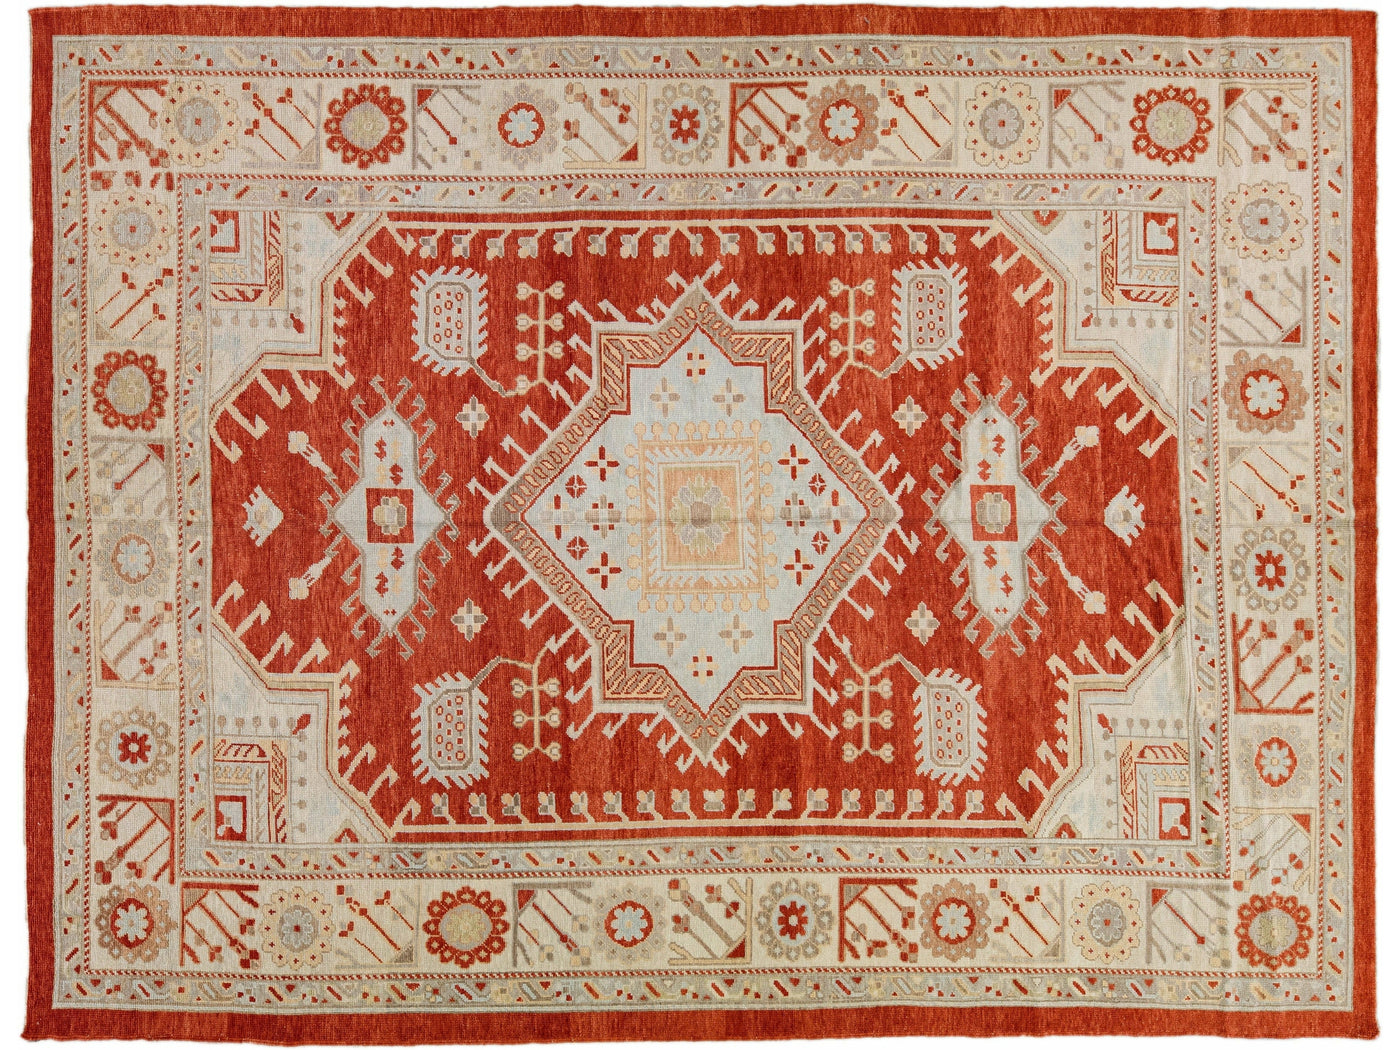 Modern Oushak Handmade Designed Wool Rug With a Terracotta Orange Color